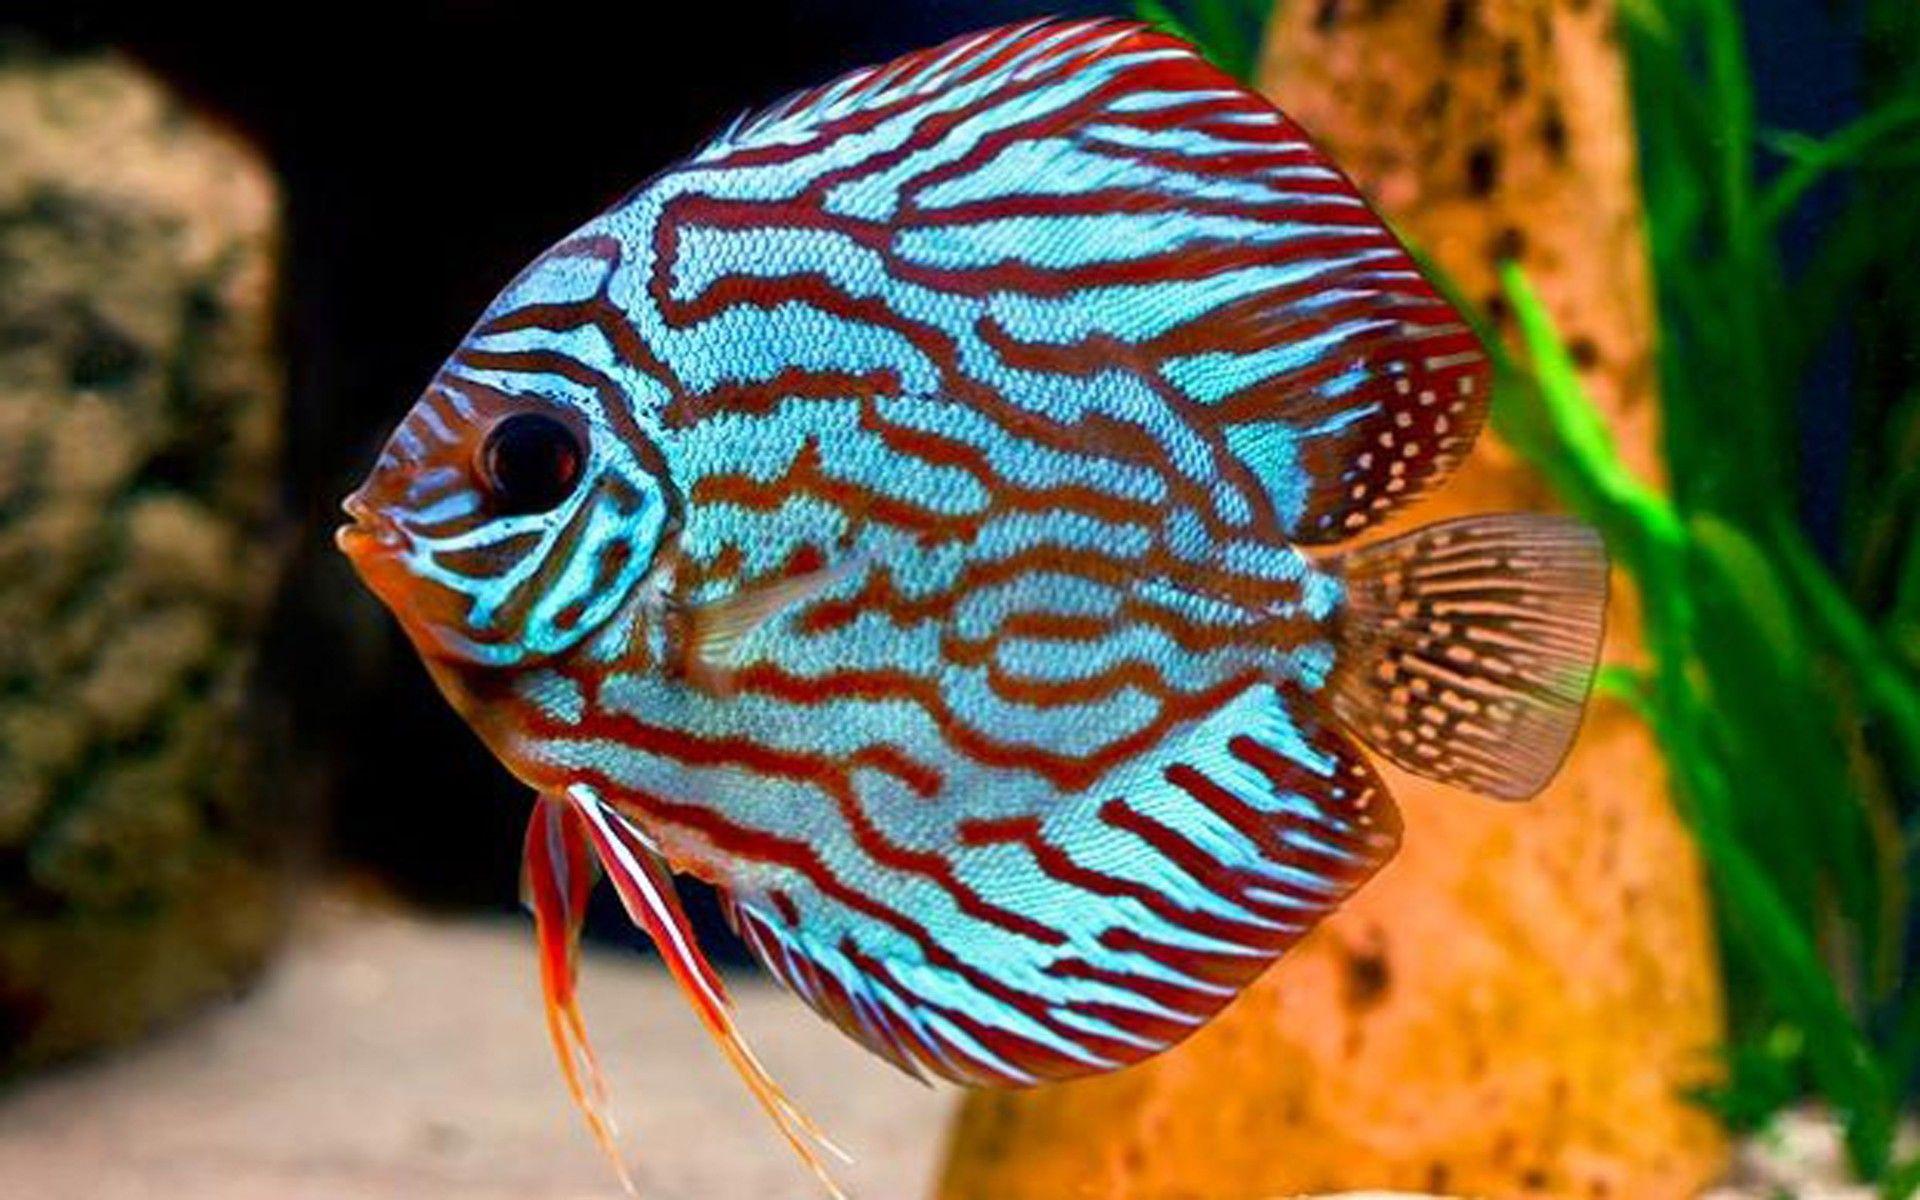 Discus Fish Look For Colour, Wallpaper13.com